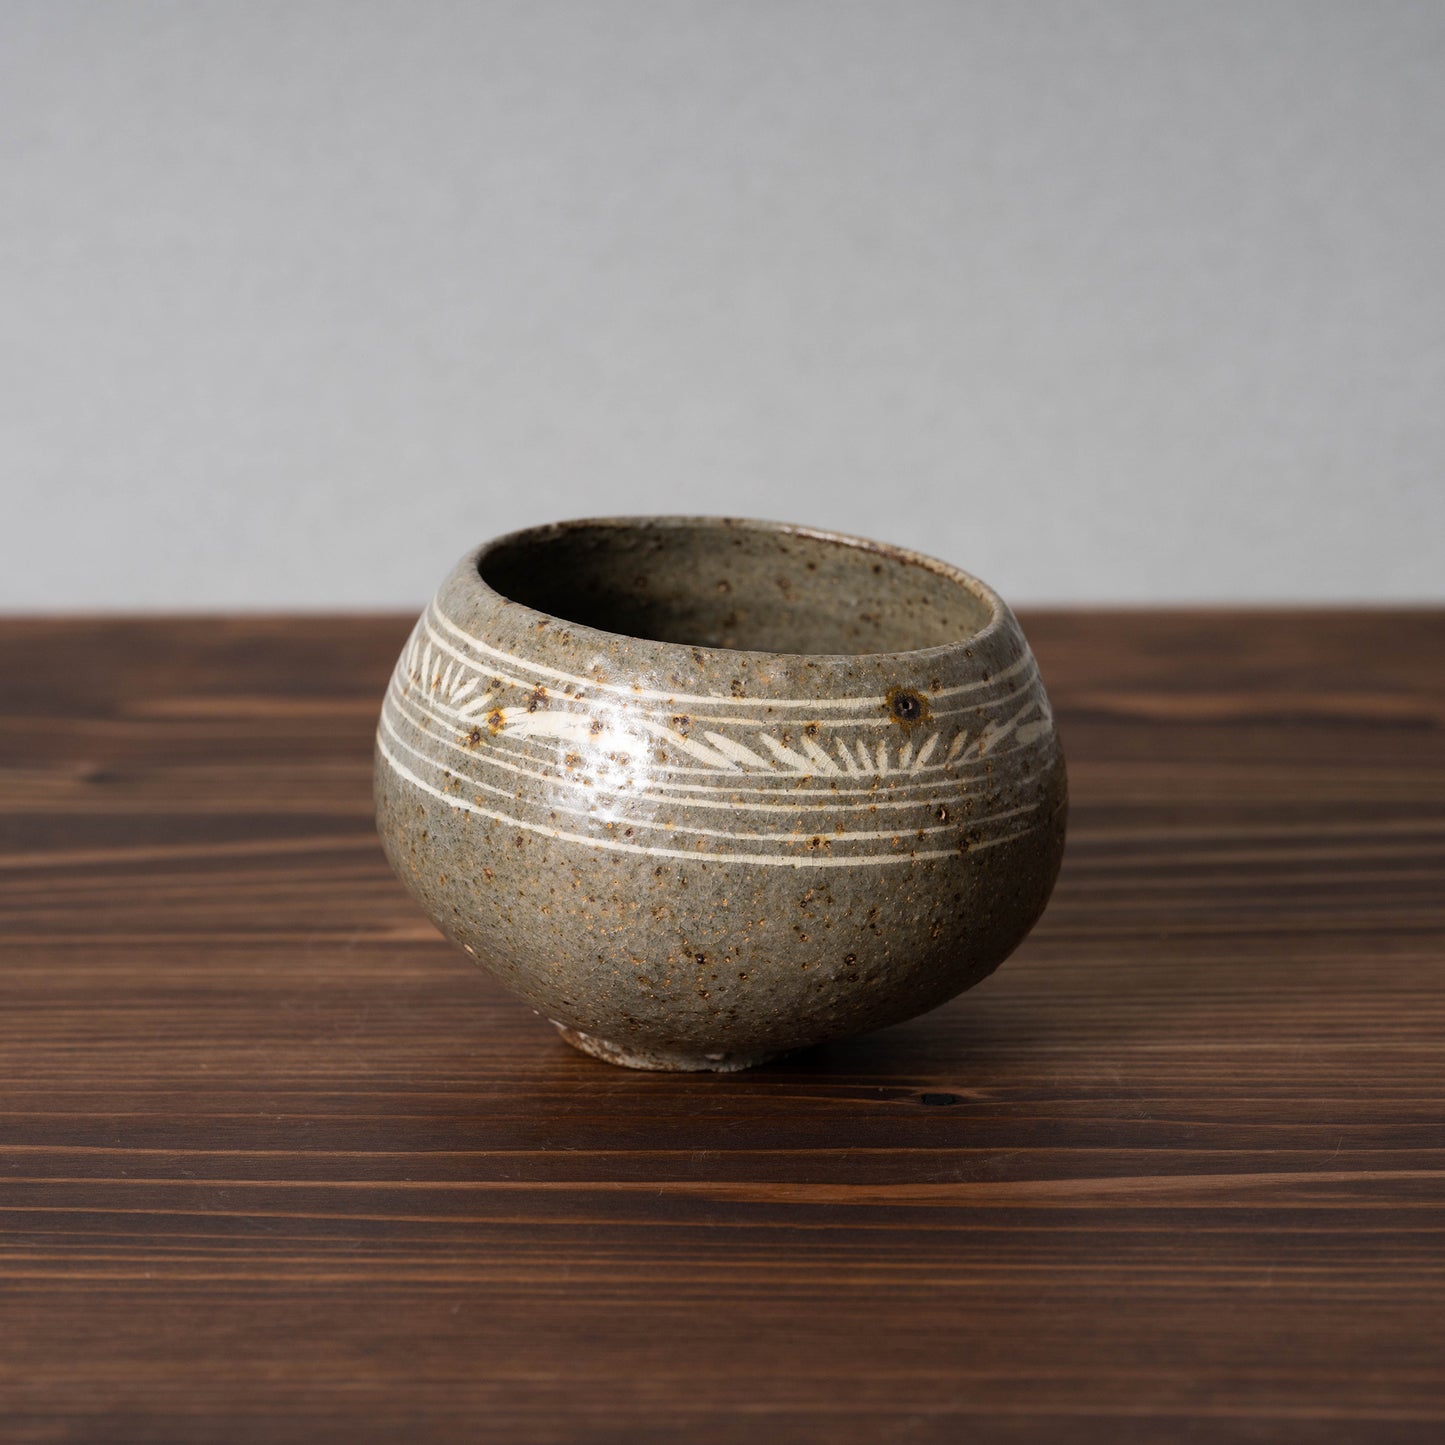 Joseon Dynasty Buncheong Jar with Inlaid